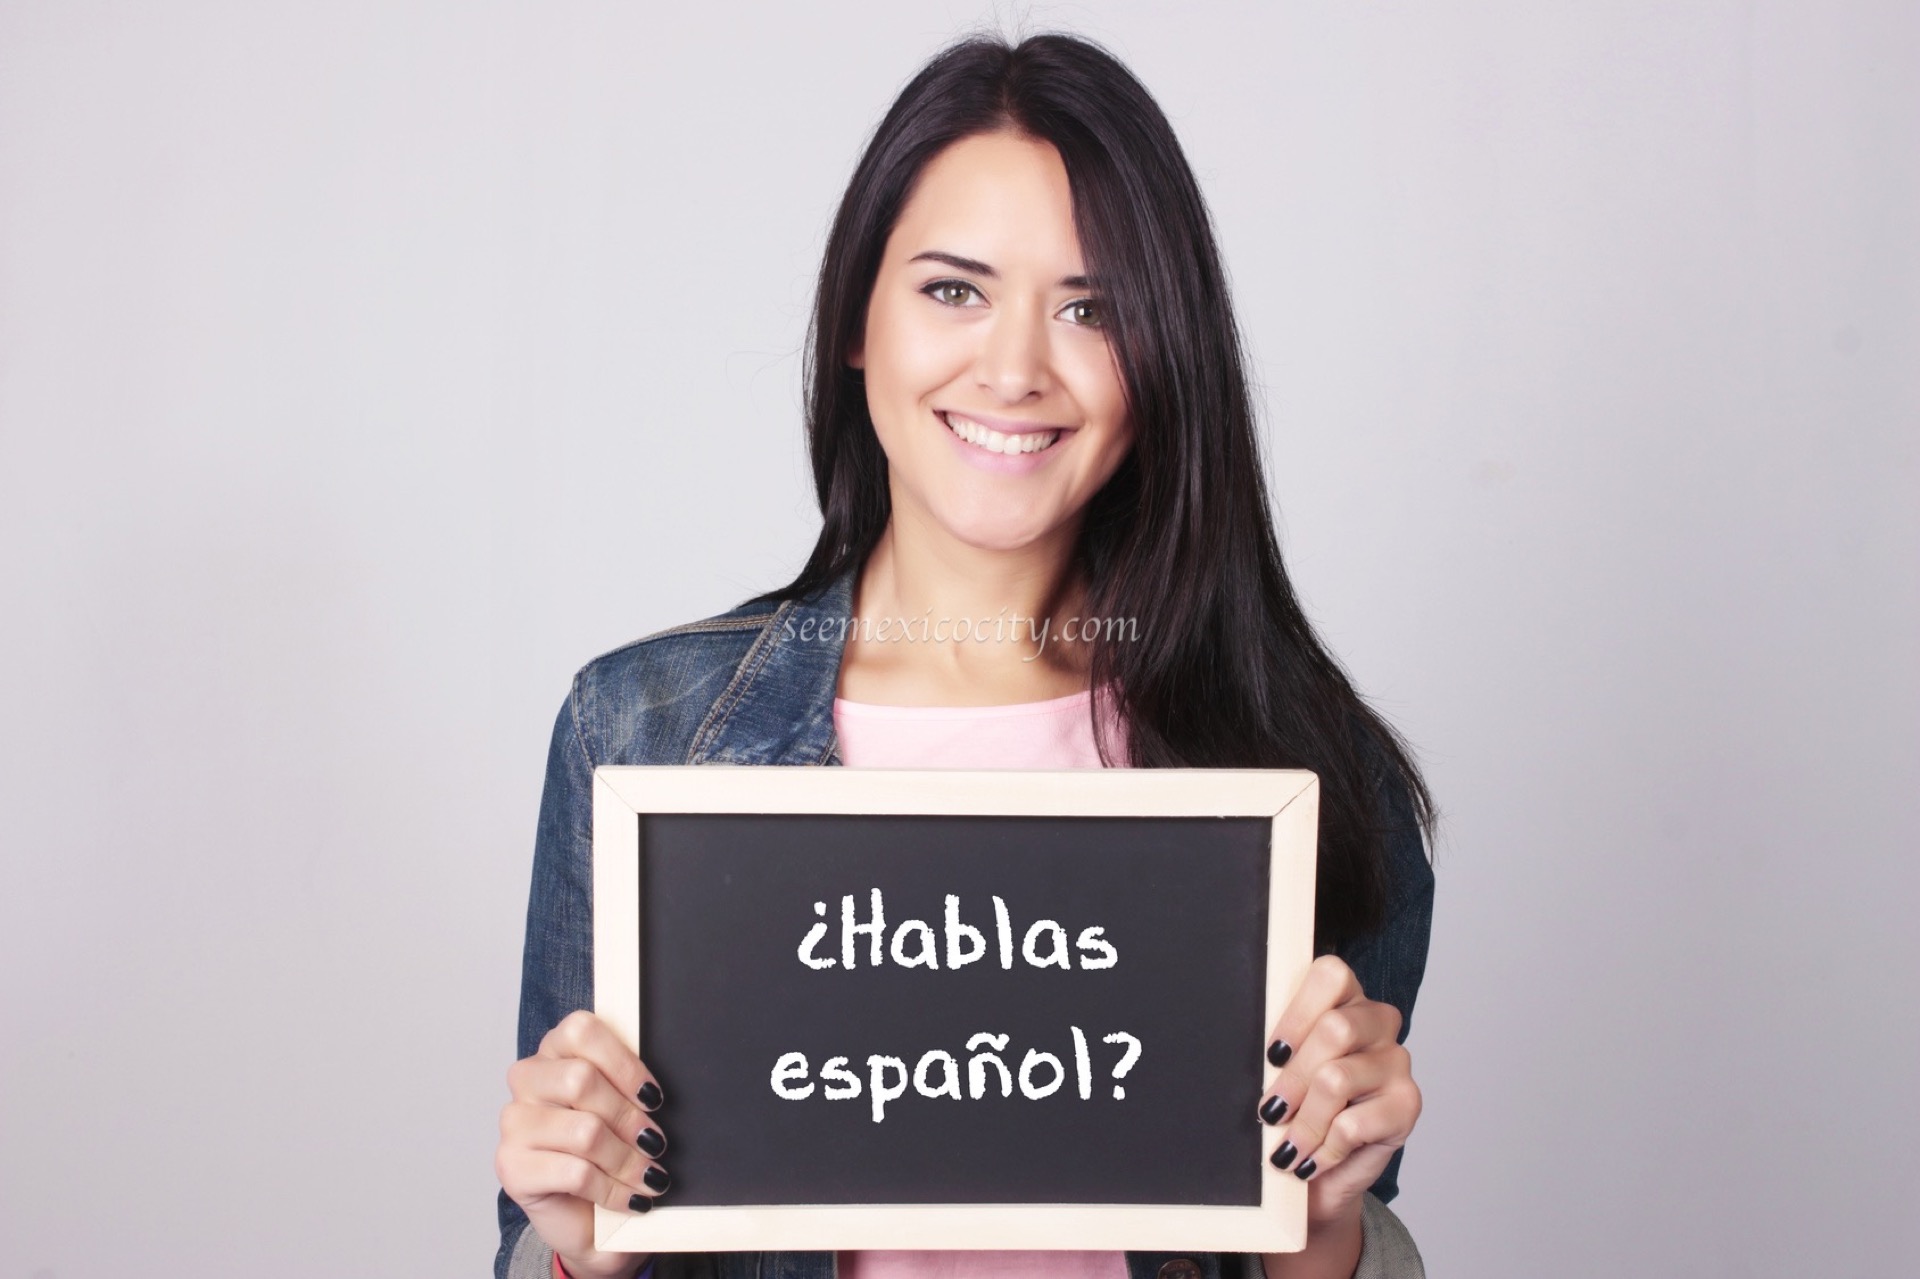 Young woman holding sign "Hablas español?""